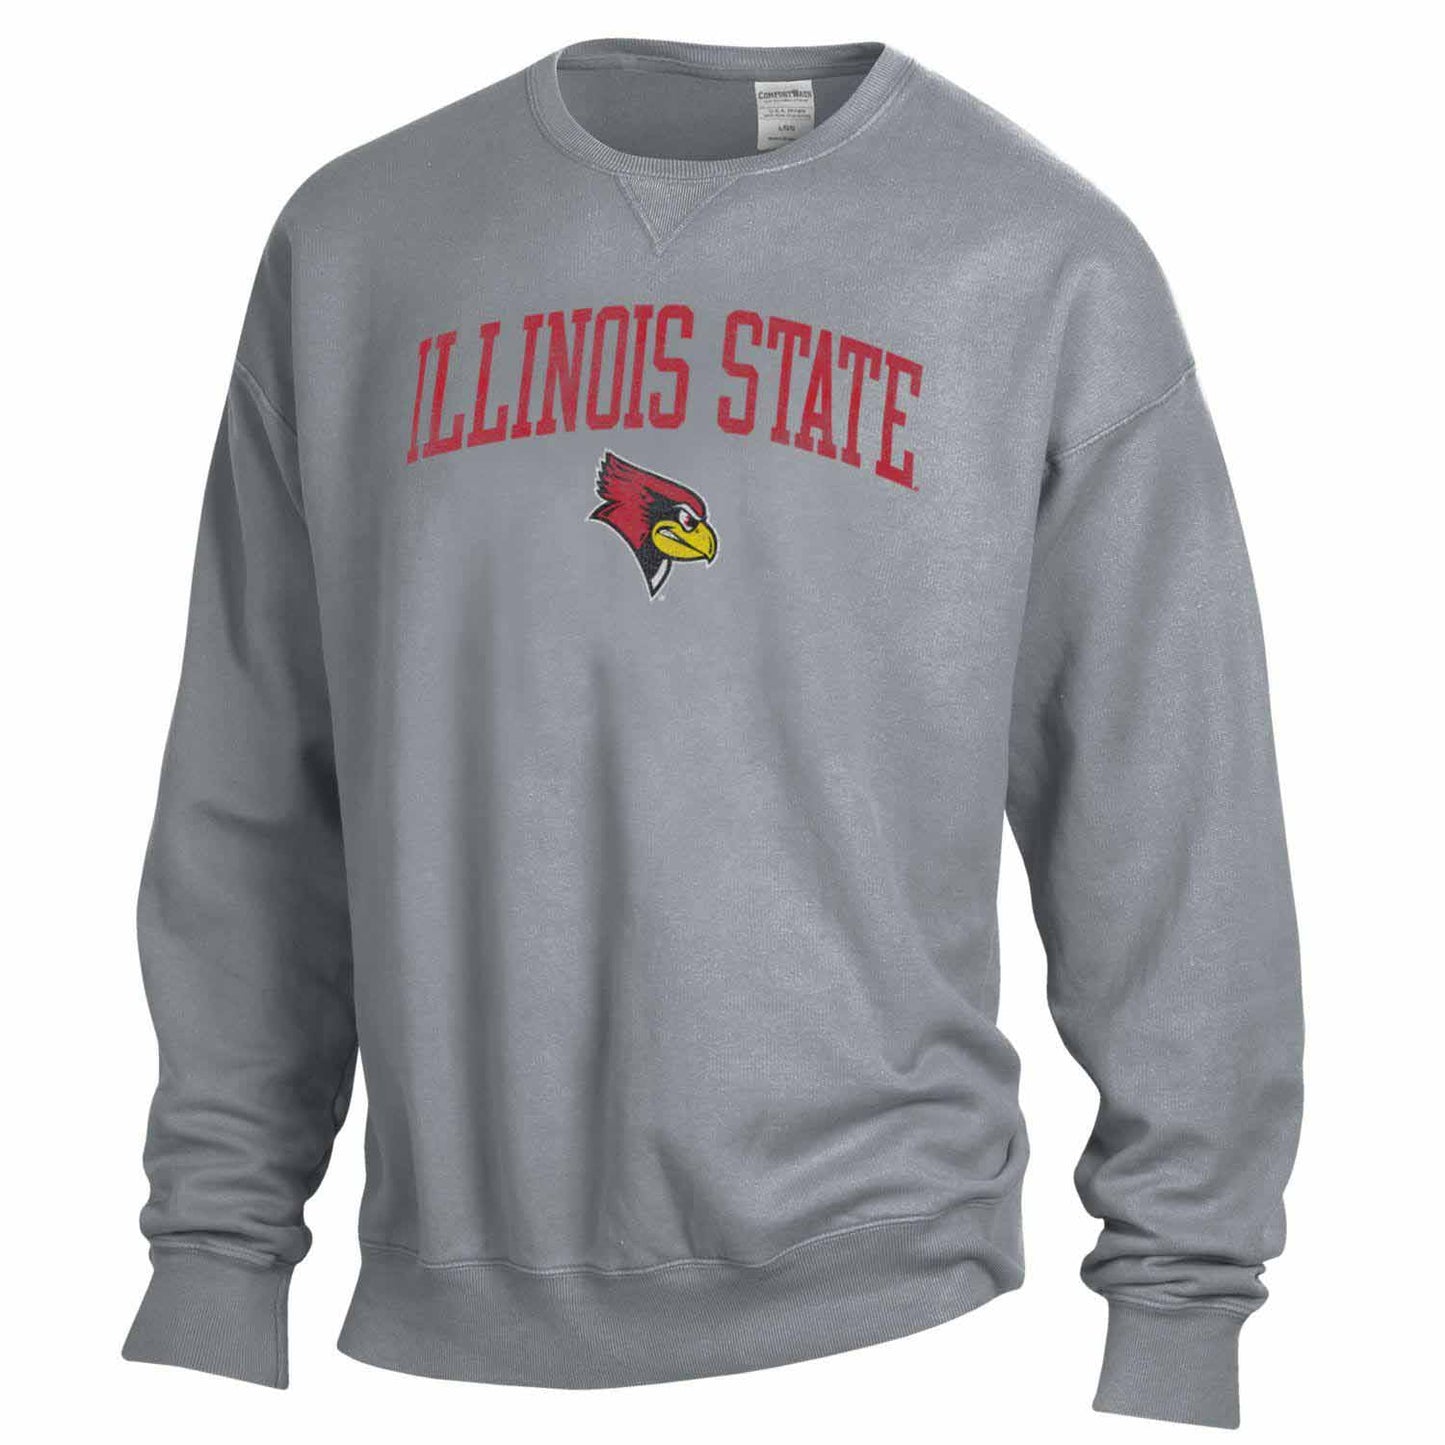 Illinois State Redbirds Illinois State Redbirds Adult Ultra Soft Comfort Wash Crewneck Sweatshirt